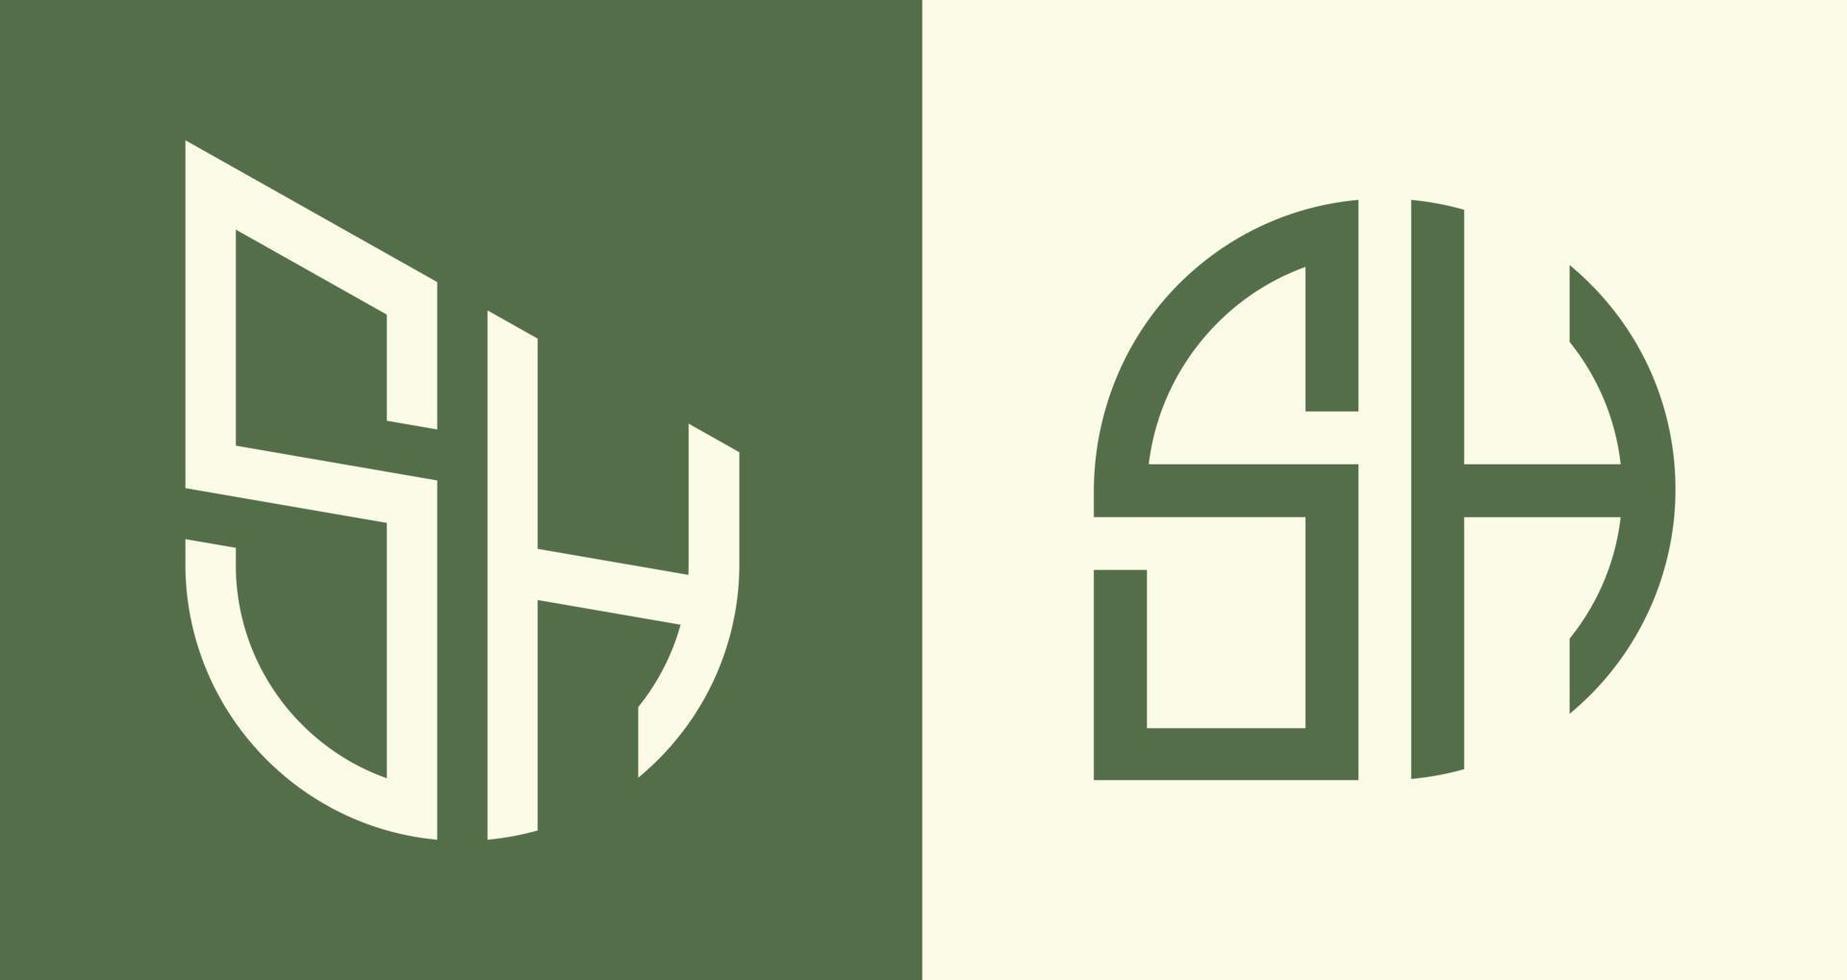 kreative einfache anfangsbuchstaben sh-logo-designs paket. vektor